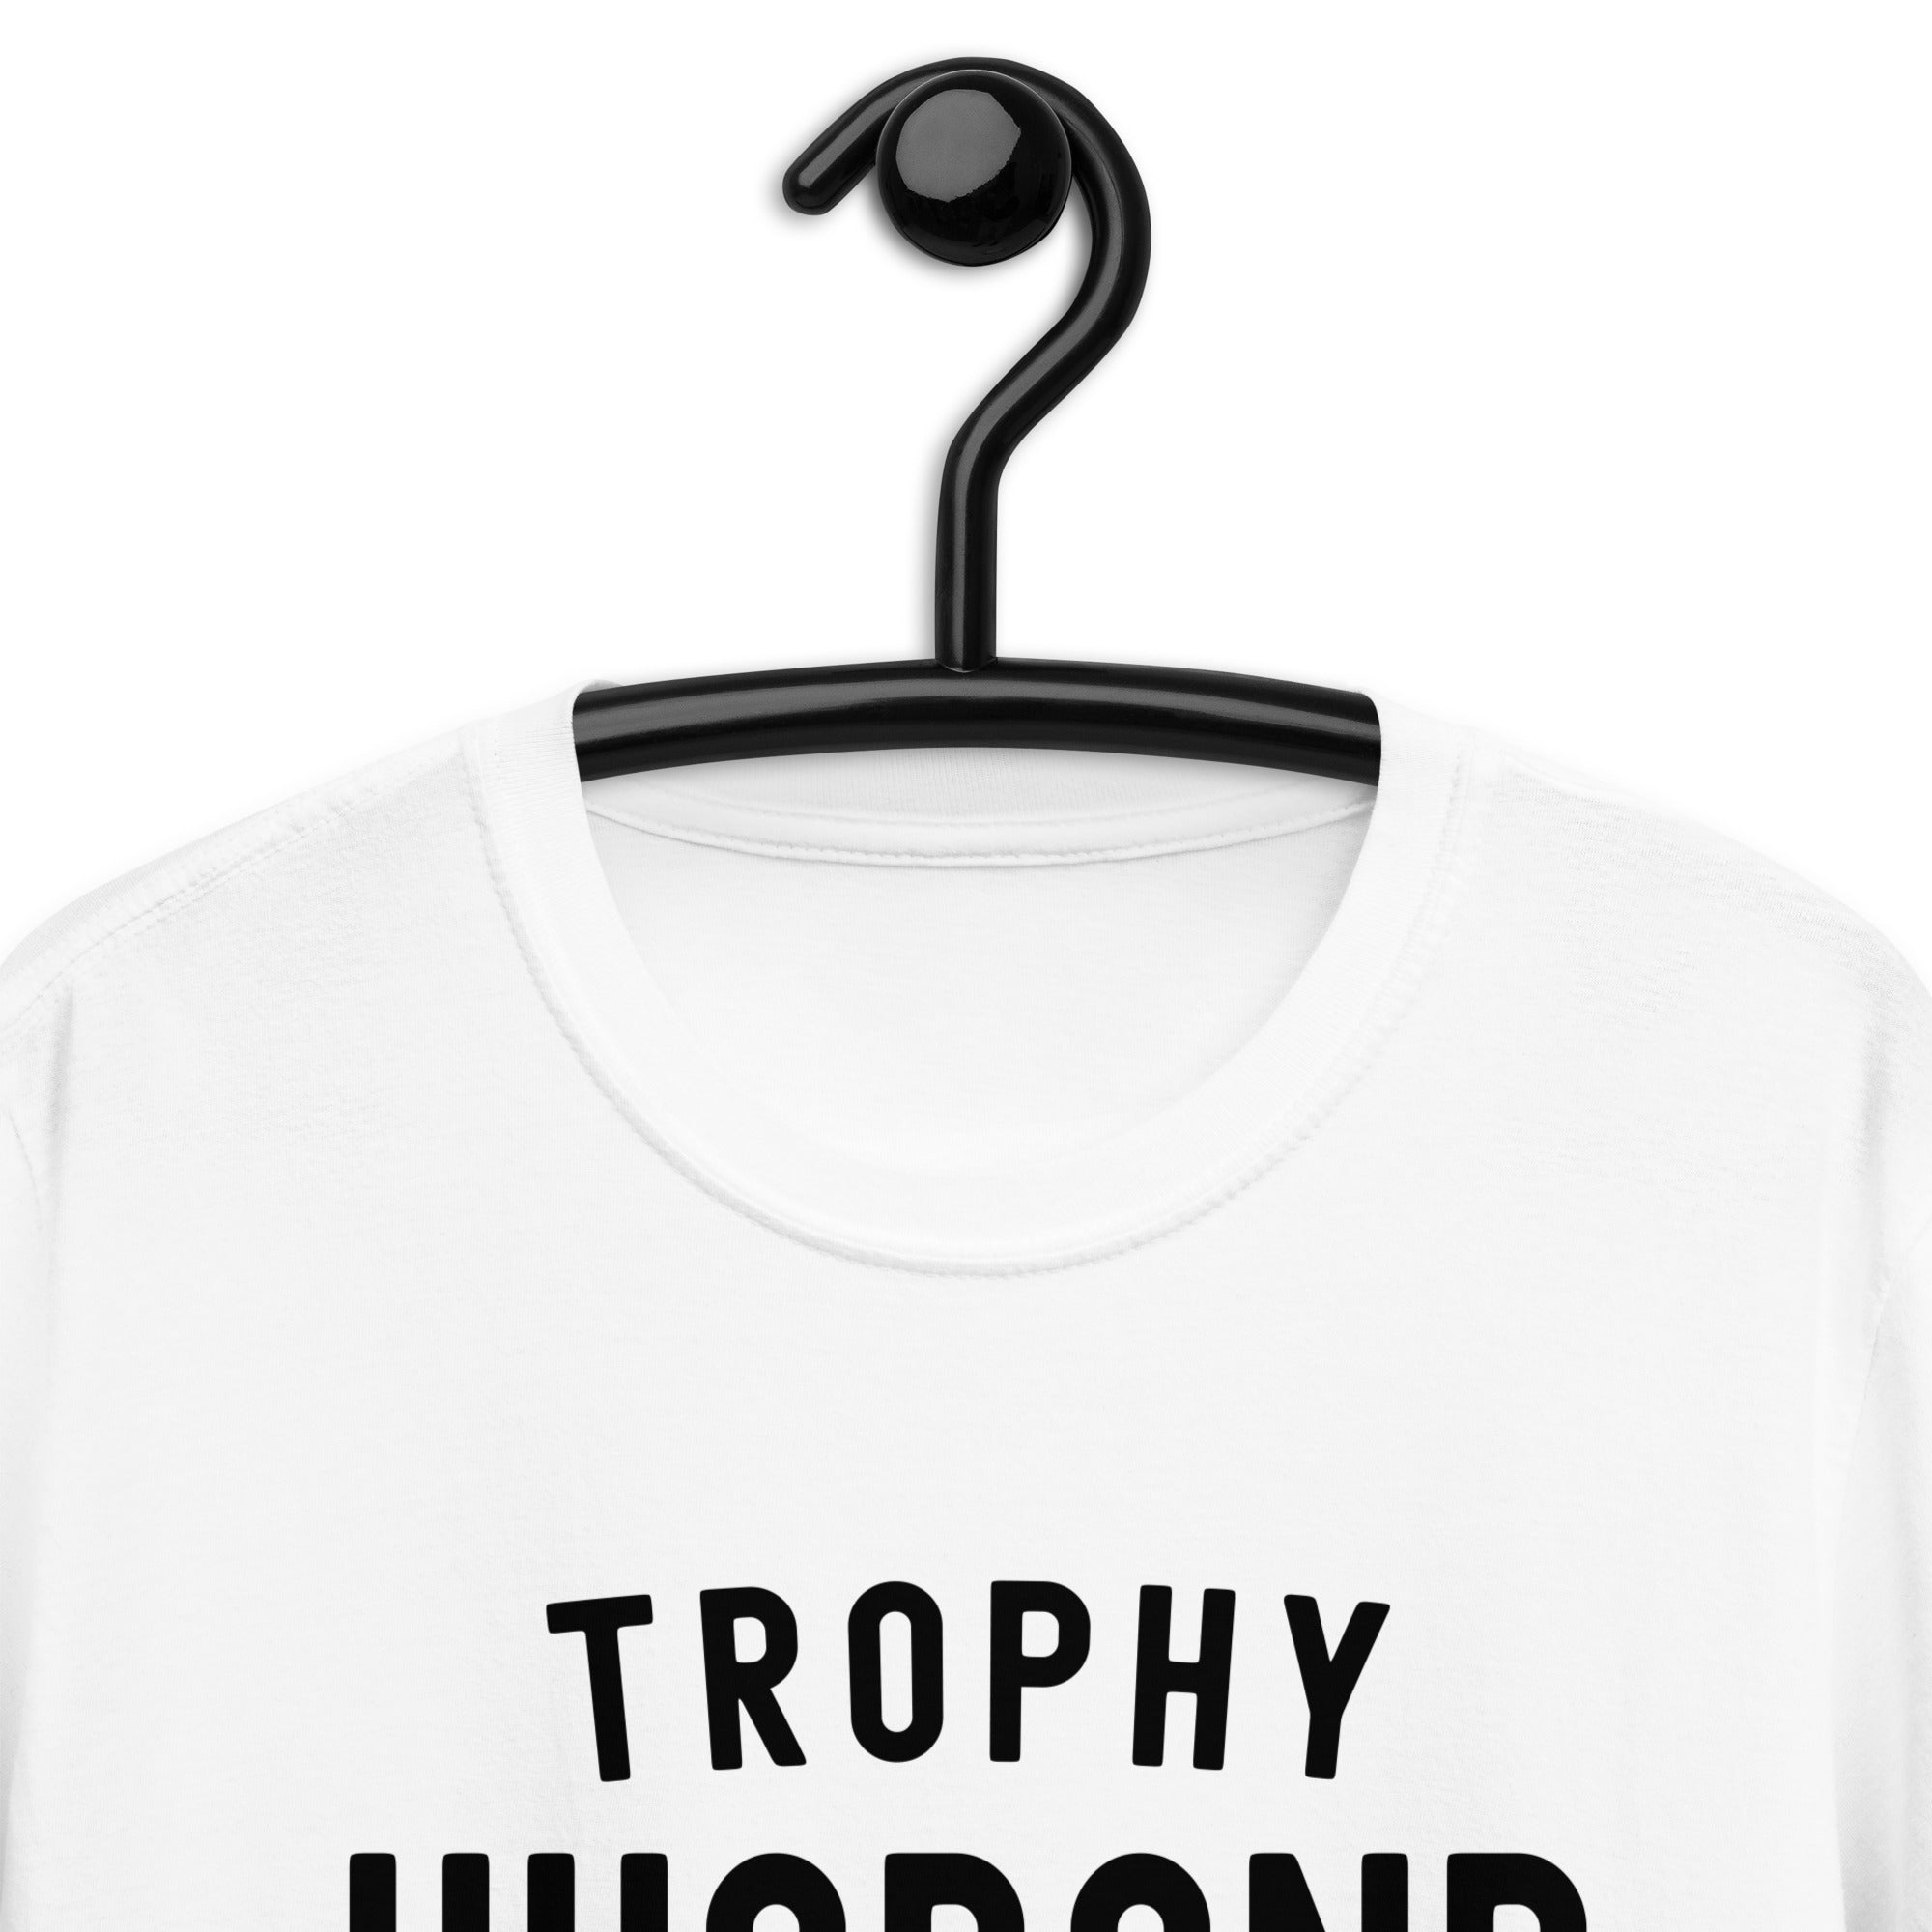 Short-Sleeve Unisex T-Shirt | Trophy Husband